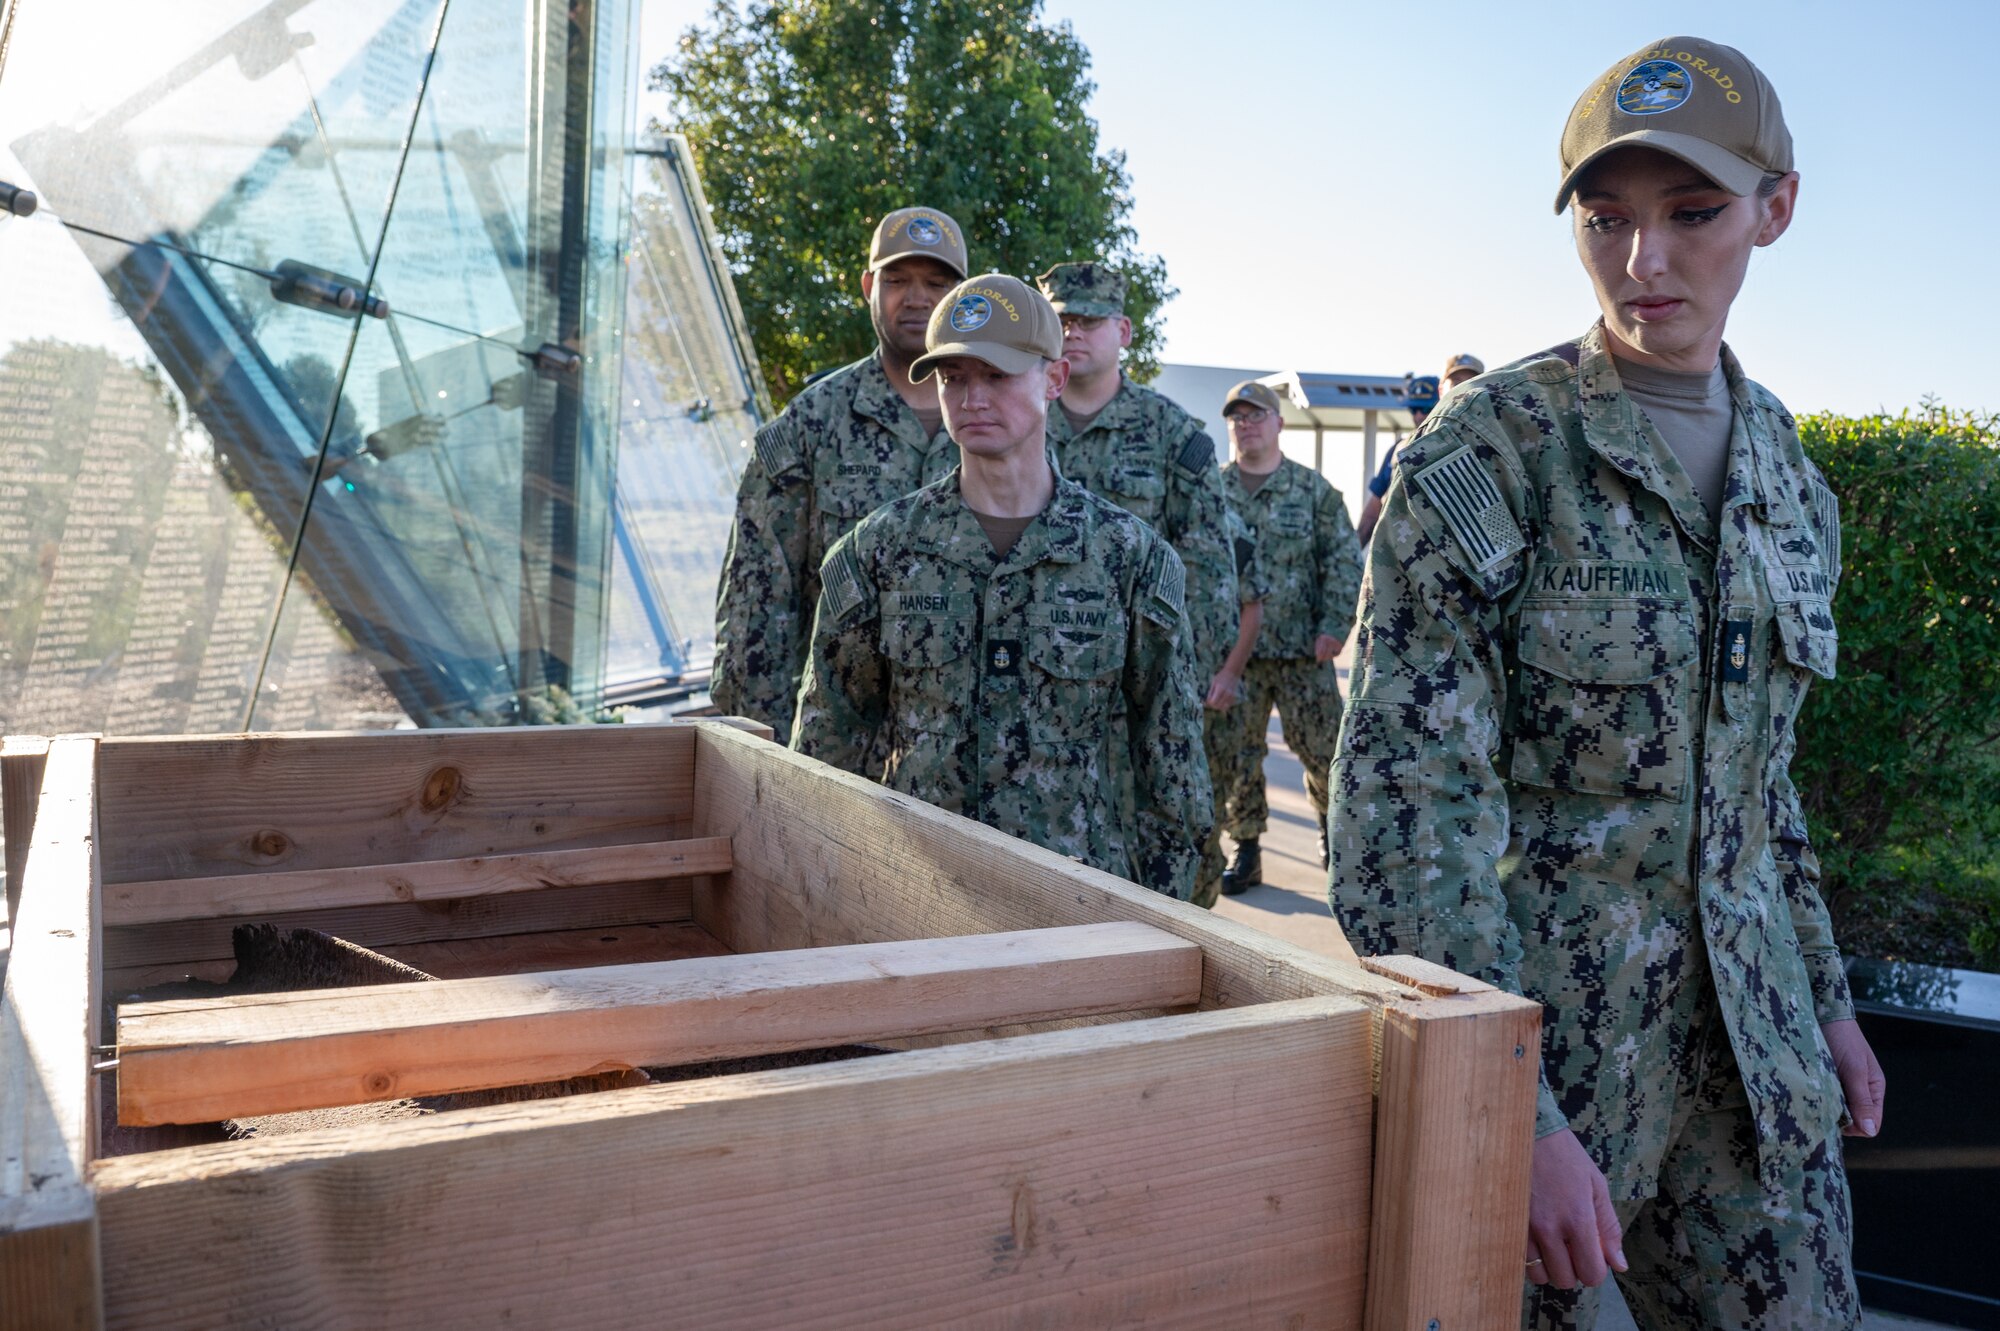 Sailors walk past a wooden box and look at it.